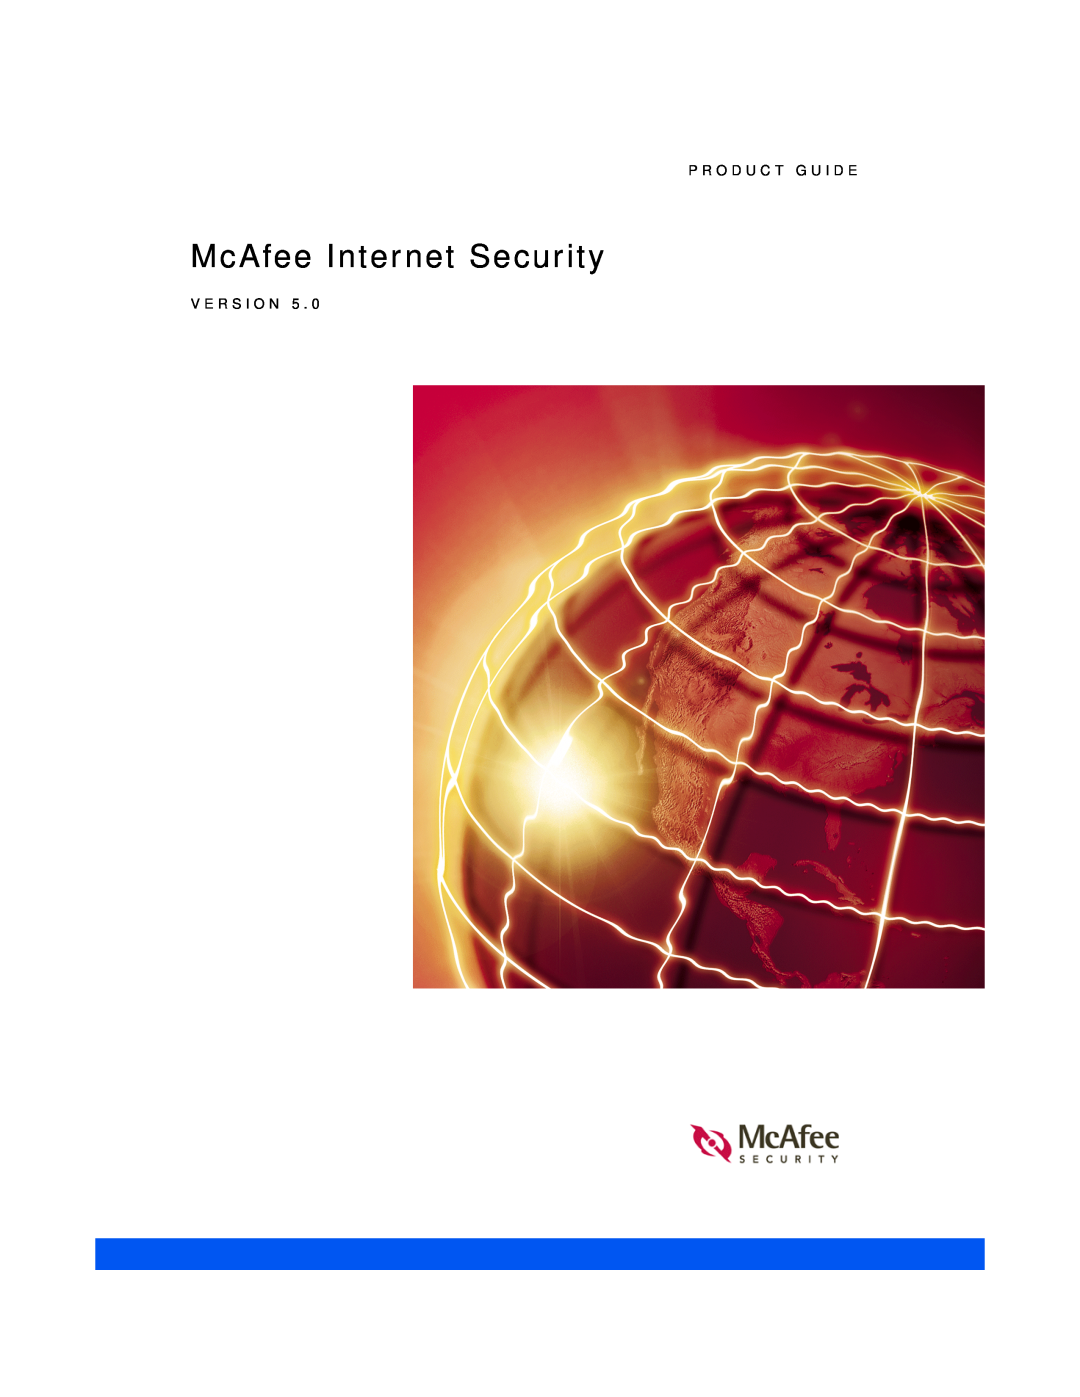 McAfee 5 manual McAfee Internet Security, P R O D U C T G U I D E, V E R S I O N 